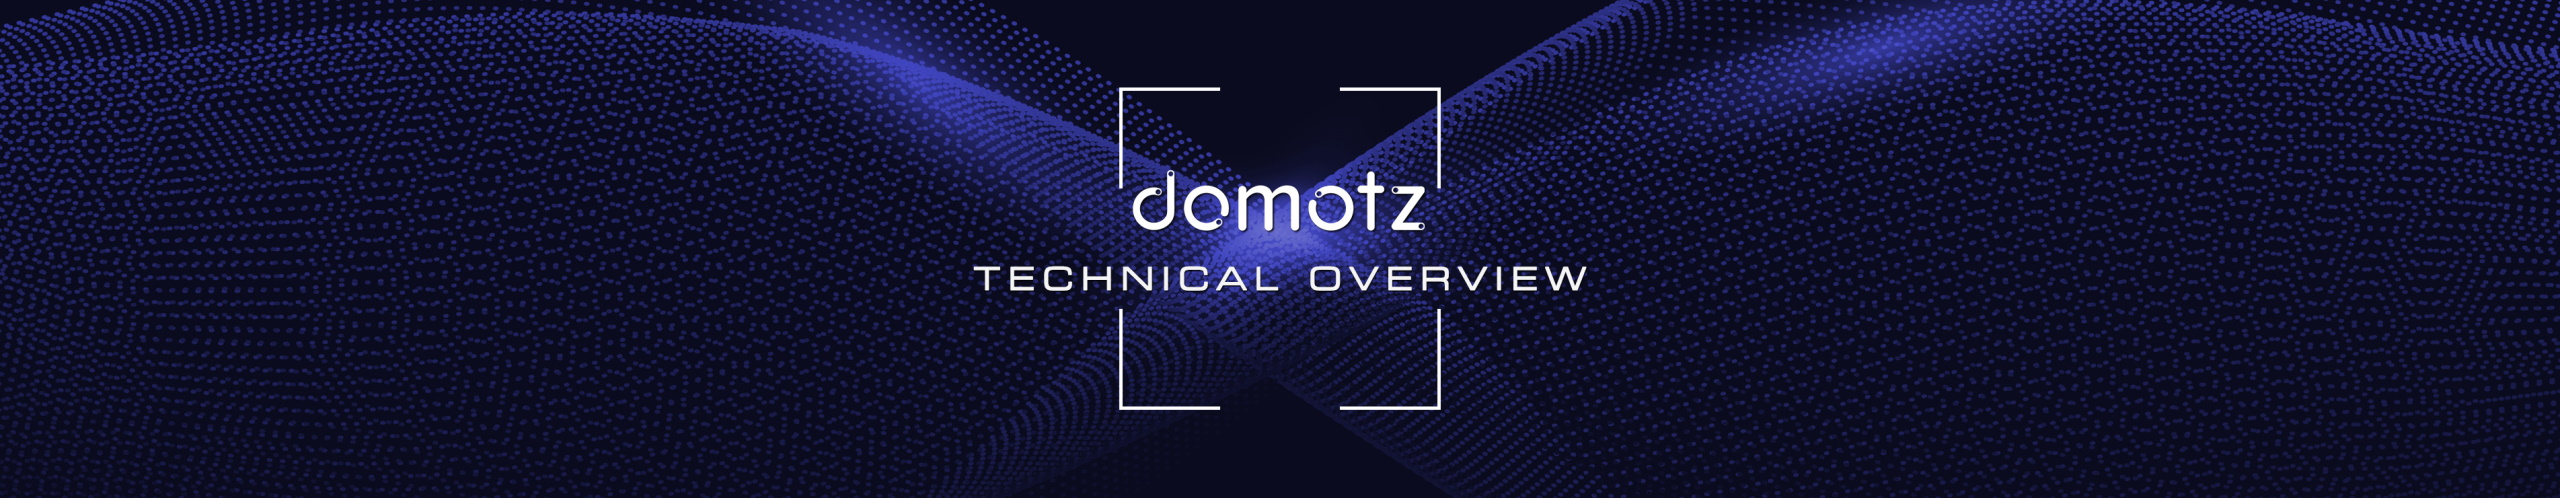 Domotz Technical Overview